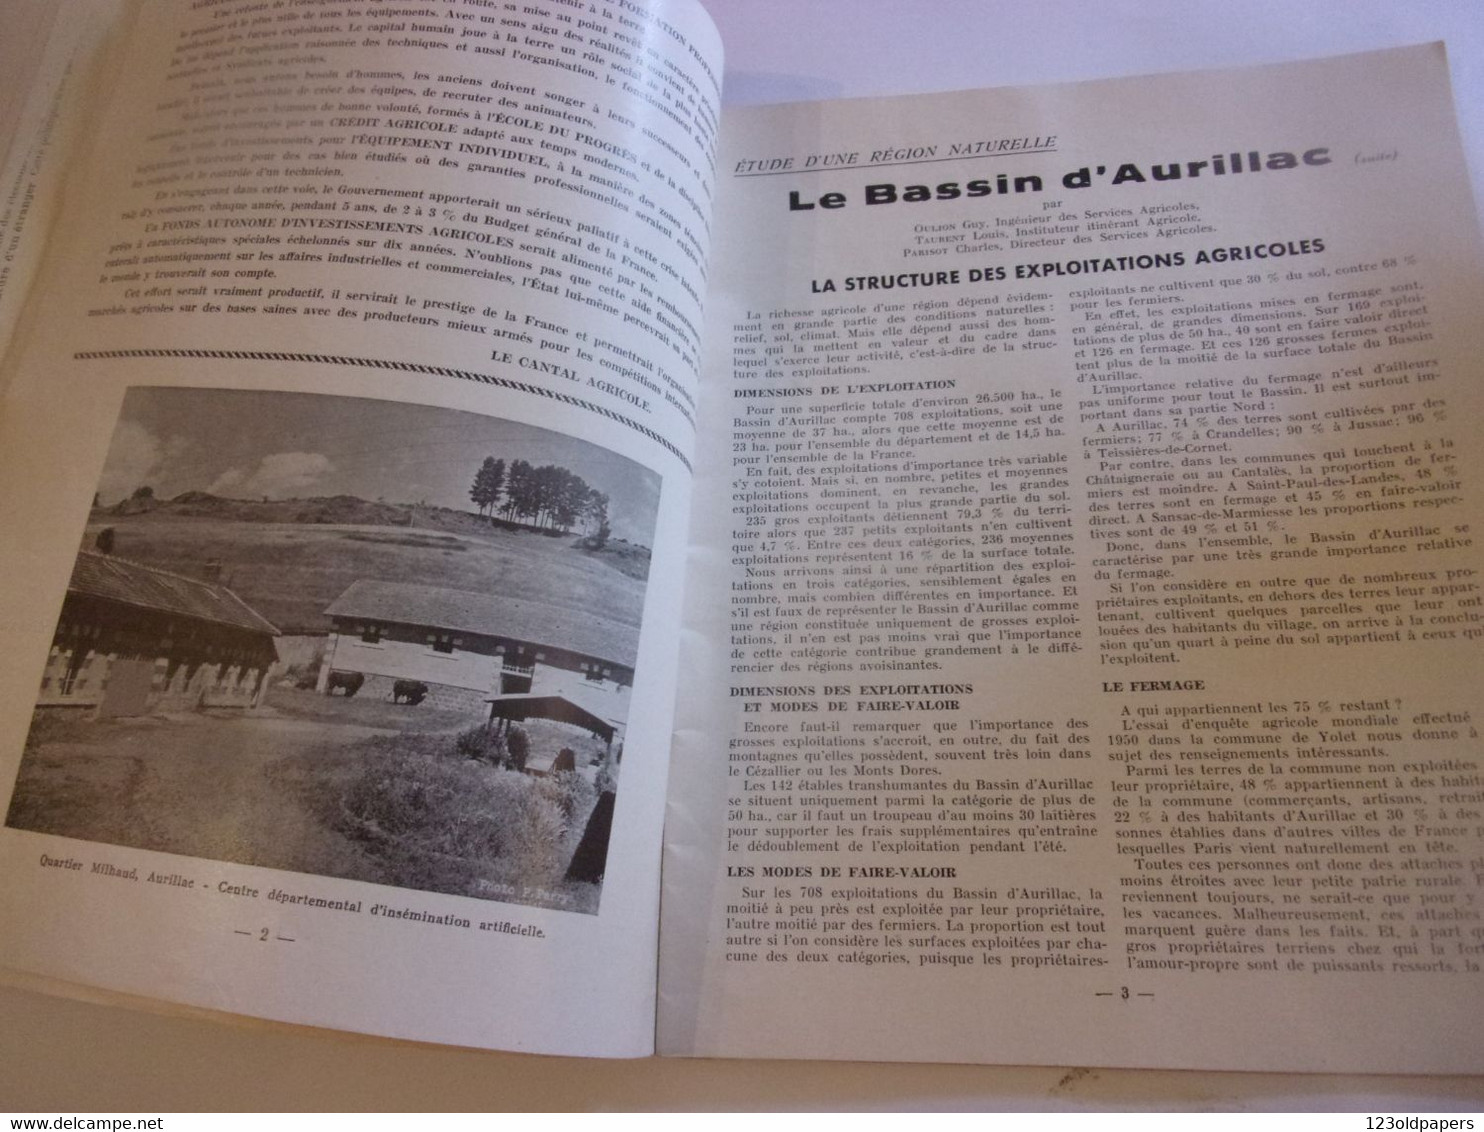 ♥️  RARE N°12 1953  LE CANTAL AGRICOLE: Revue AURILLAC FROMAGE ... 45 PAGES ELEVAGE RACE AUBRAC... - Auvergne